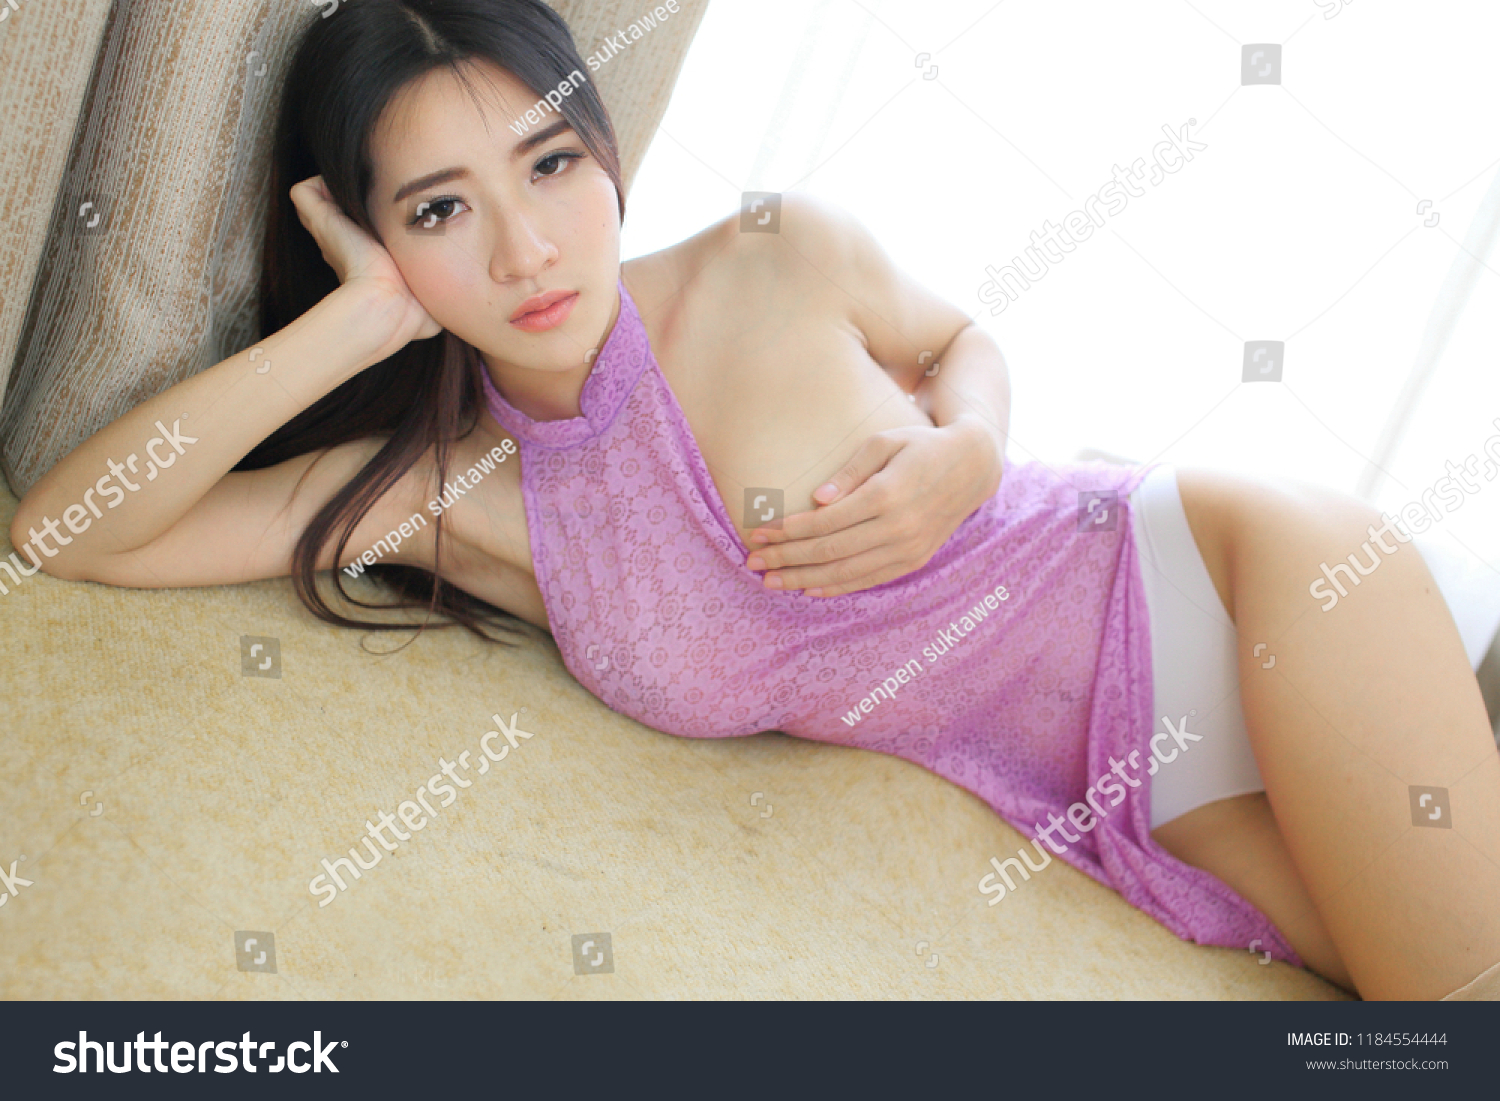 Hot Nude Asian Girl